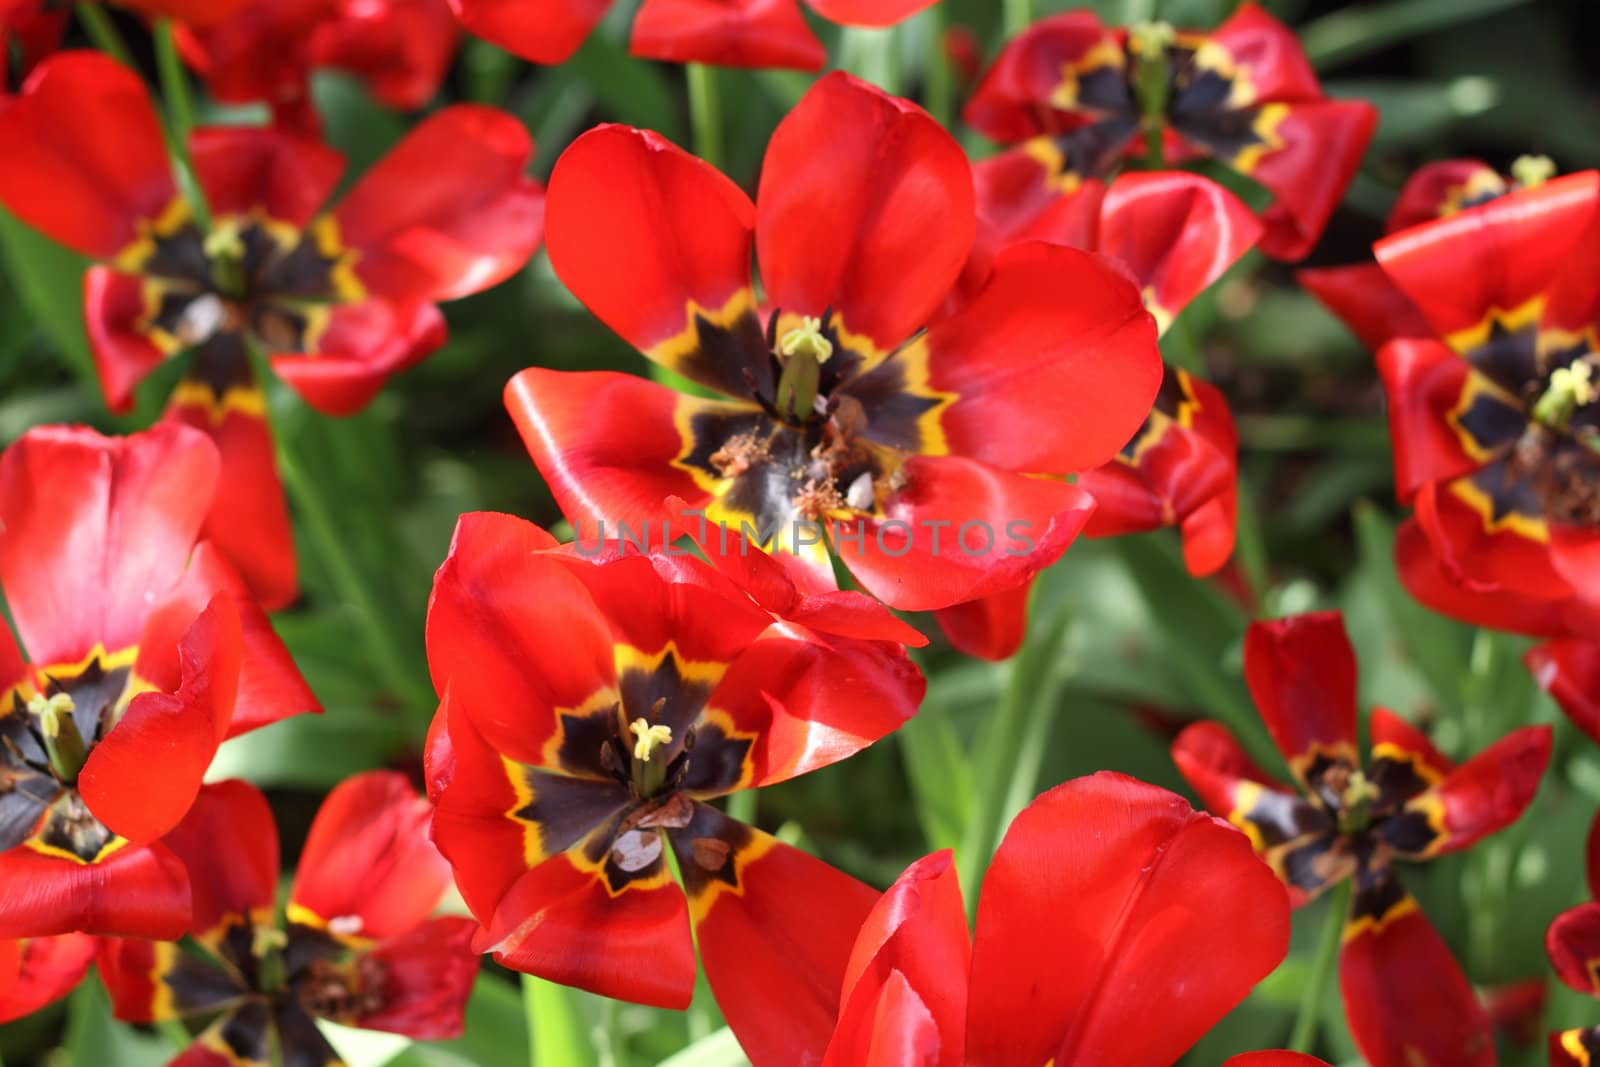 Finish flowering red tulips